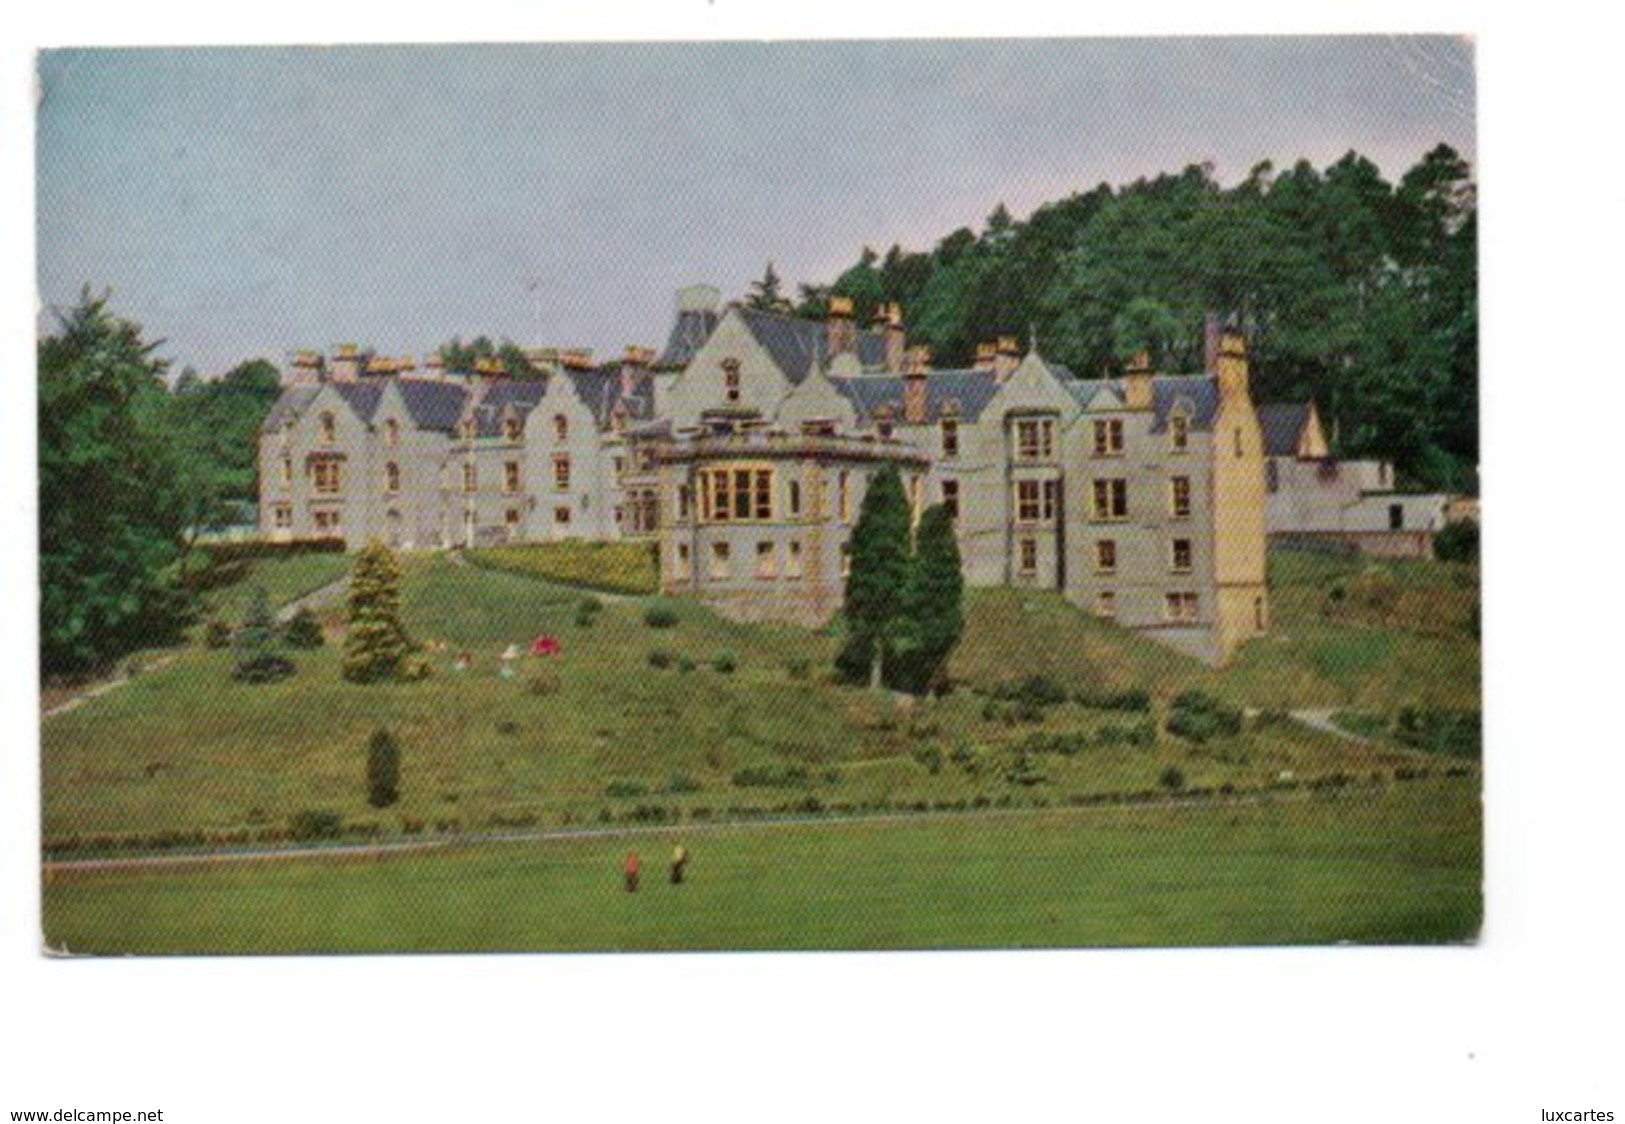 THE CLUNY HILL HOTEL. FORRES. SCOTLAND. - Moray